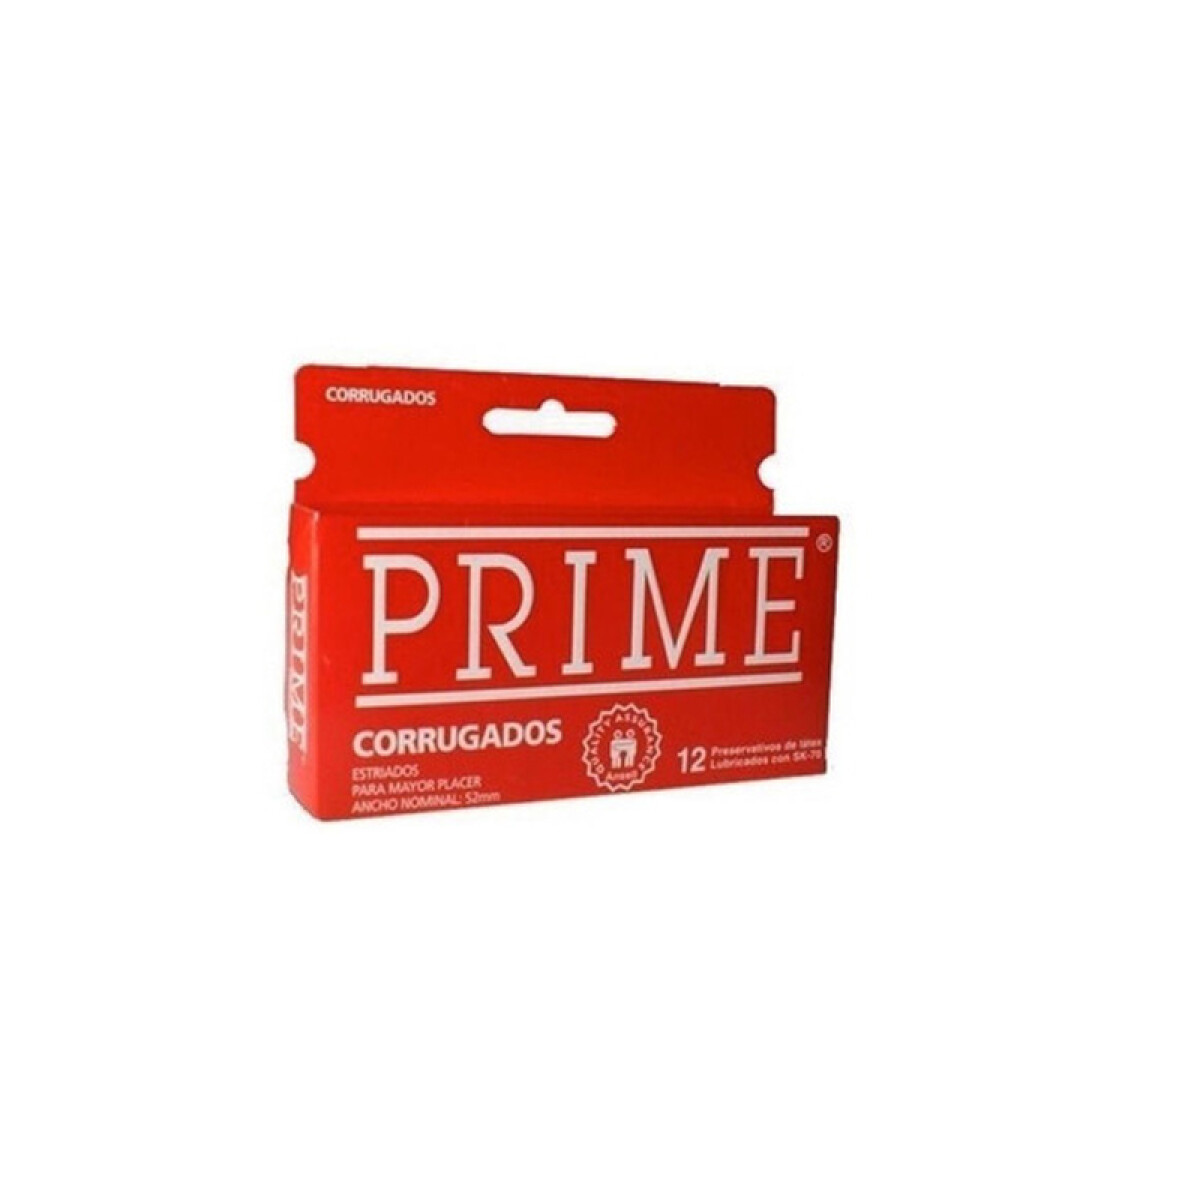 Preservativo PRIME (cajita x12u ) - Corrugados 